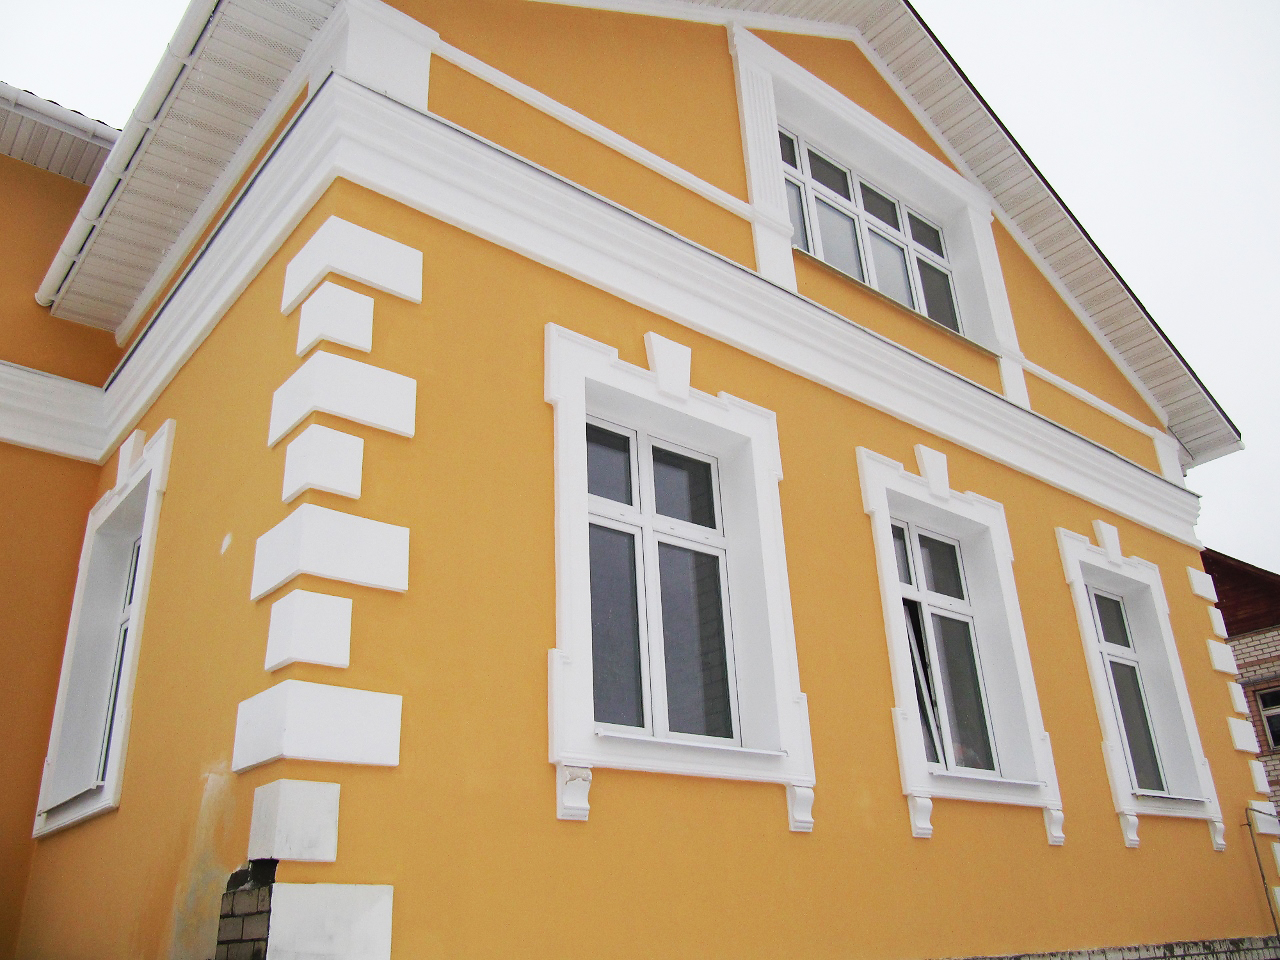 Краска для покраски дома снаружи. Краска для фасадов домов. Покраска фасадов домов. Крашенный фасад дома. Покрасить фасад дома.